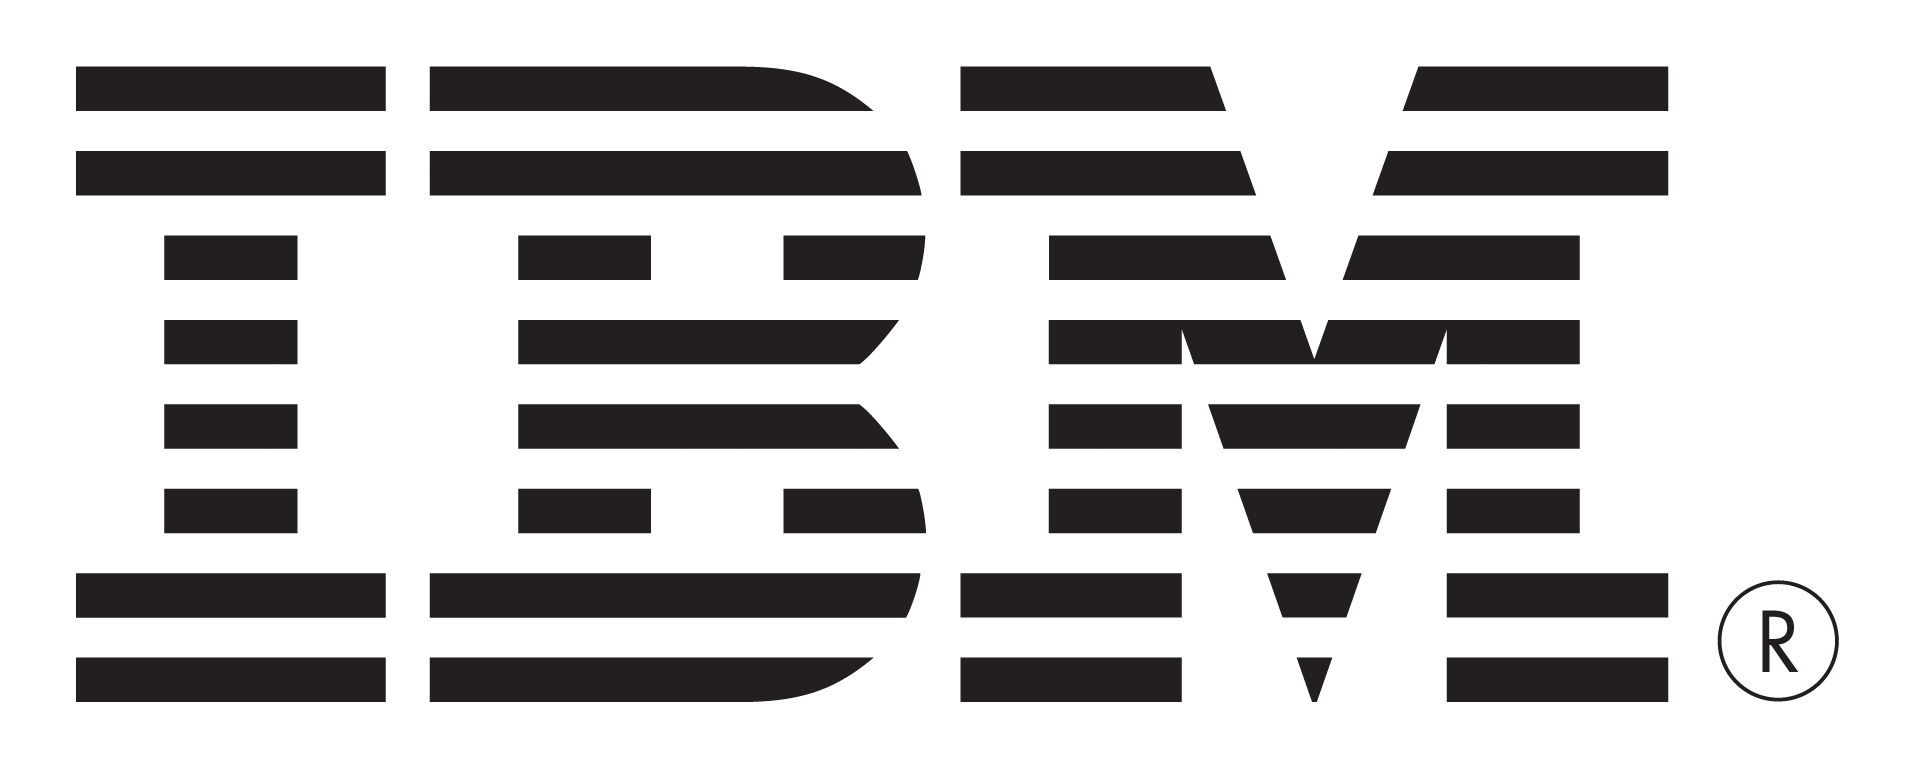 Original IBM Logo - IBM Logo Black PNG Transparent | PNG Transparent best stock photos